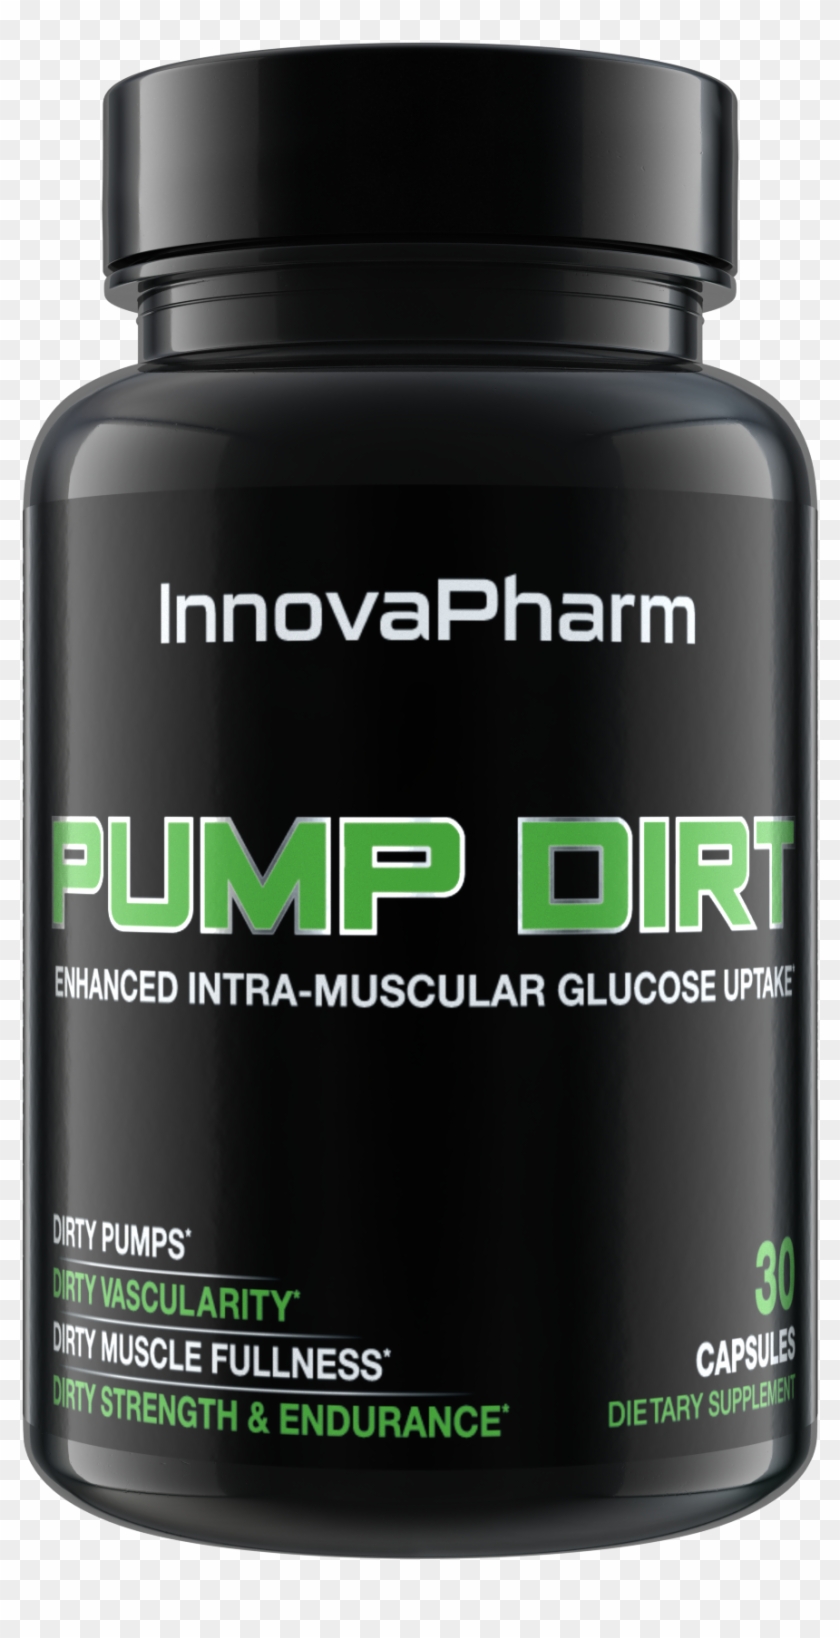 Pump Dirt Caps - Bodybuilding Supplement Clipart #3016200